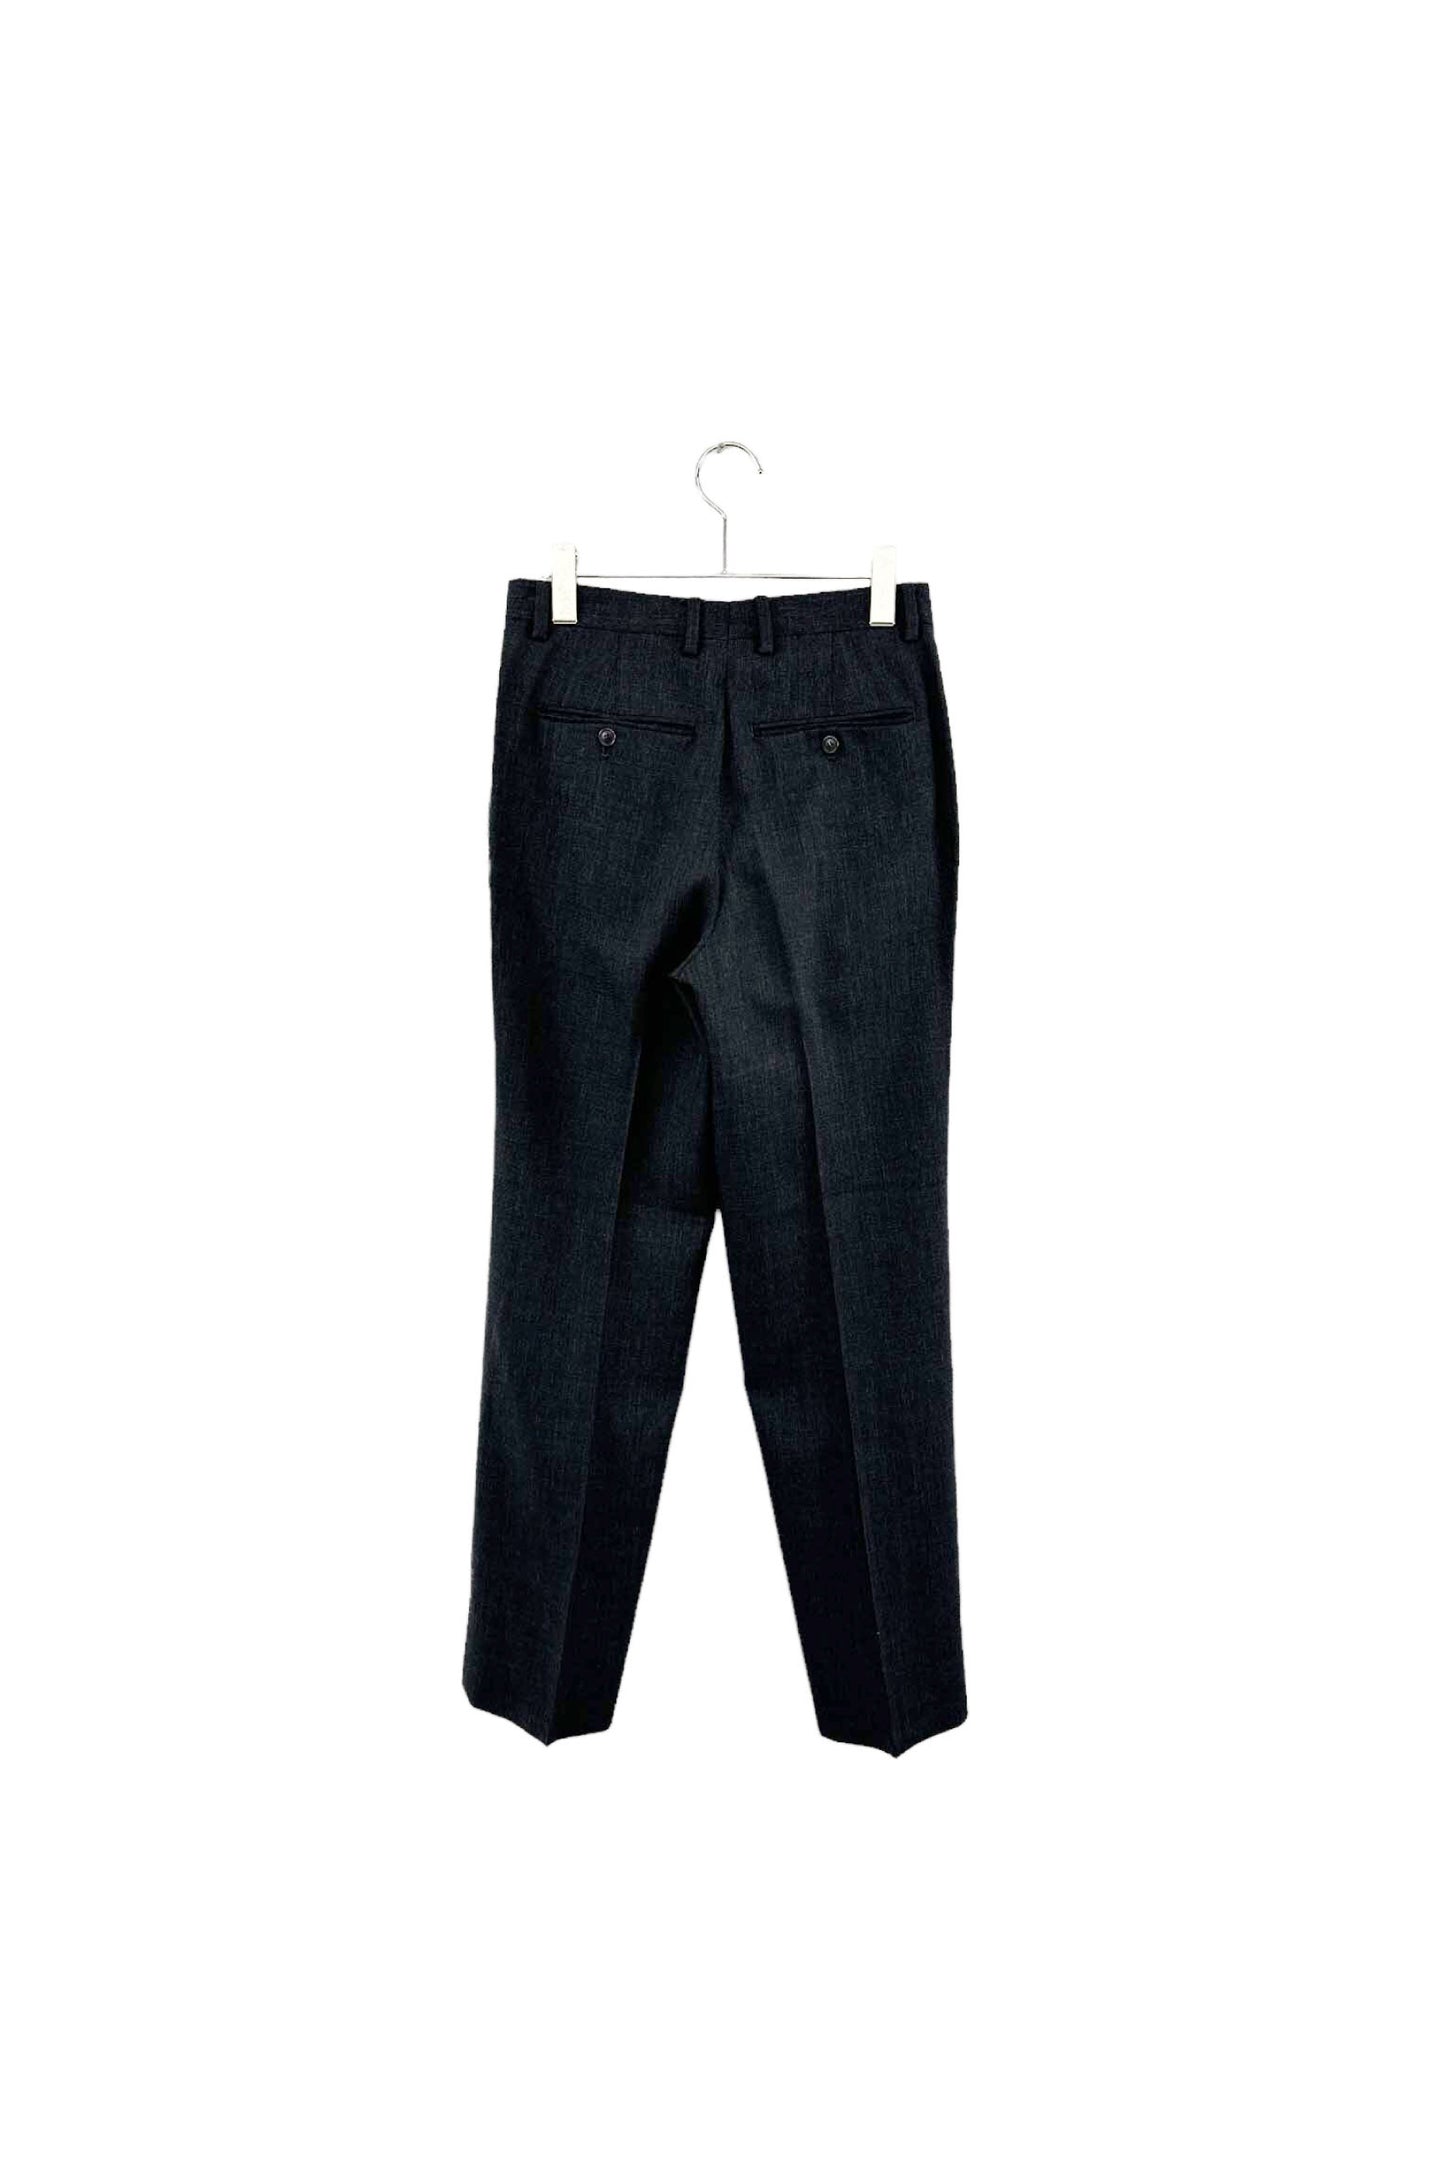 90‘s Calvin Klein charcoal gray slacks